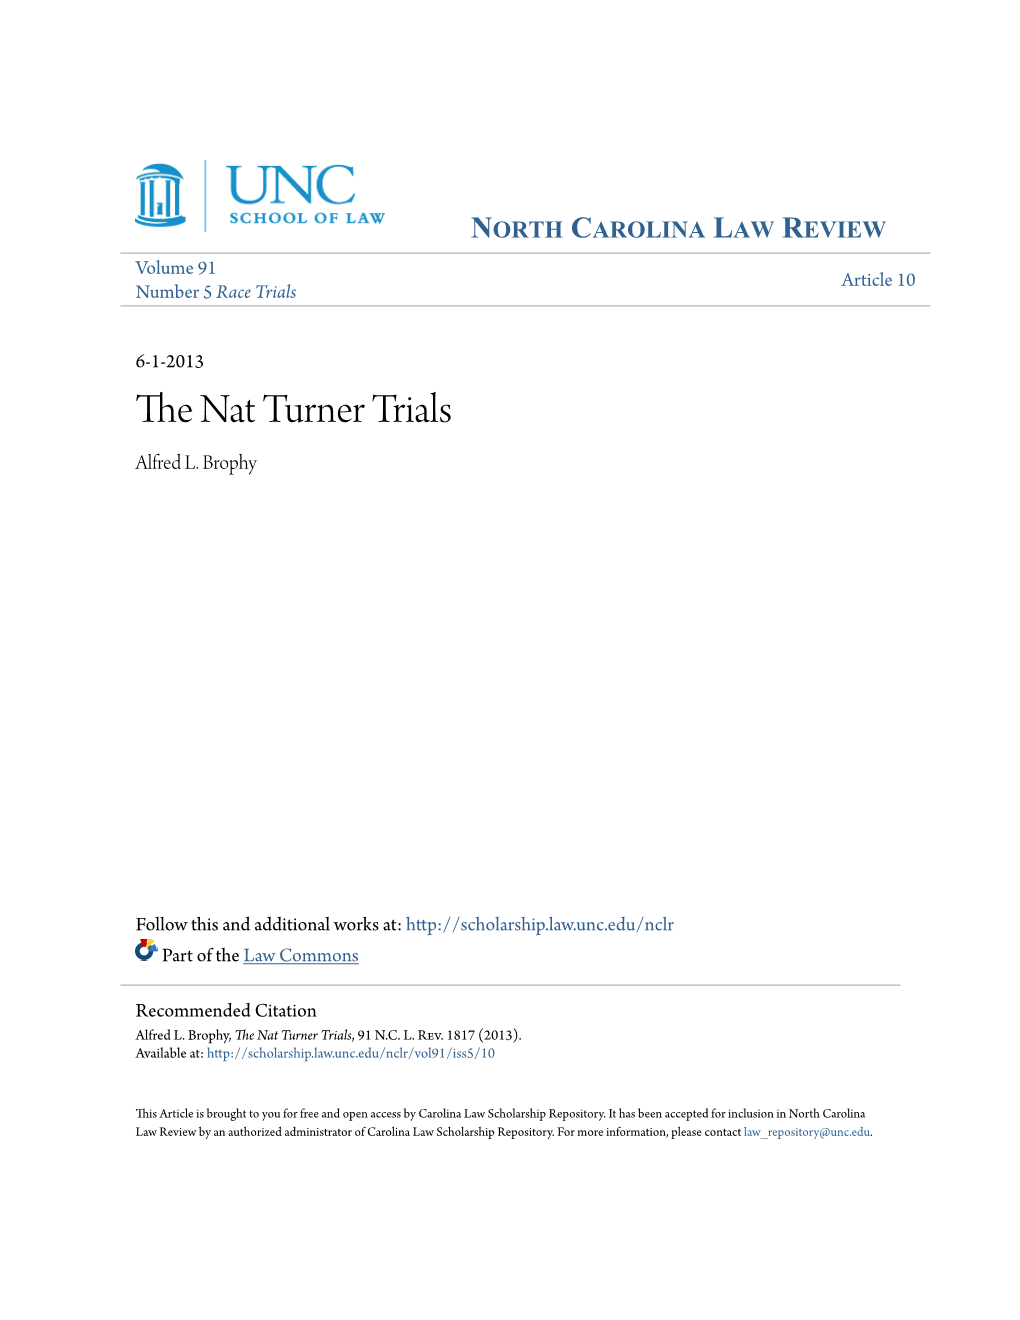 The Nat Turner Trials, 91 N.C